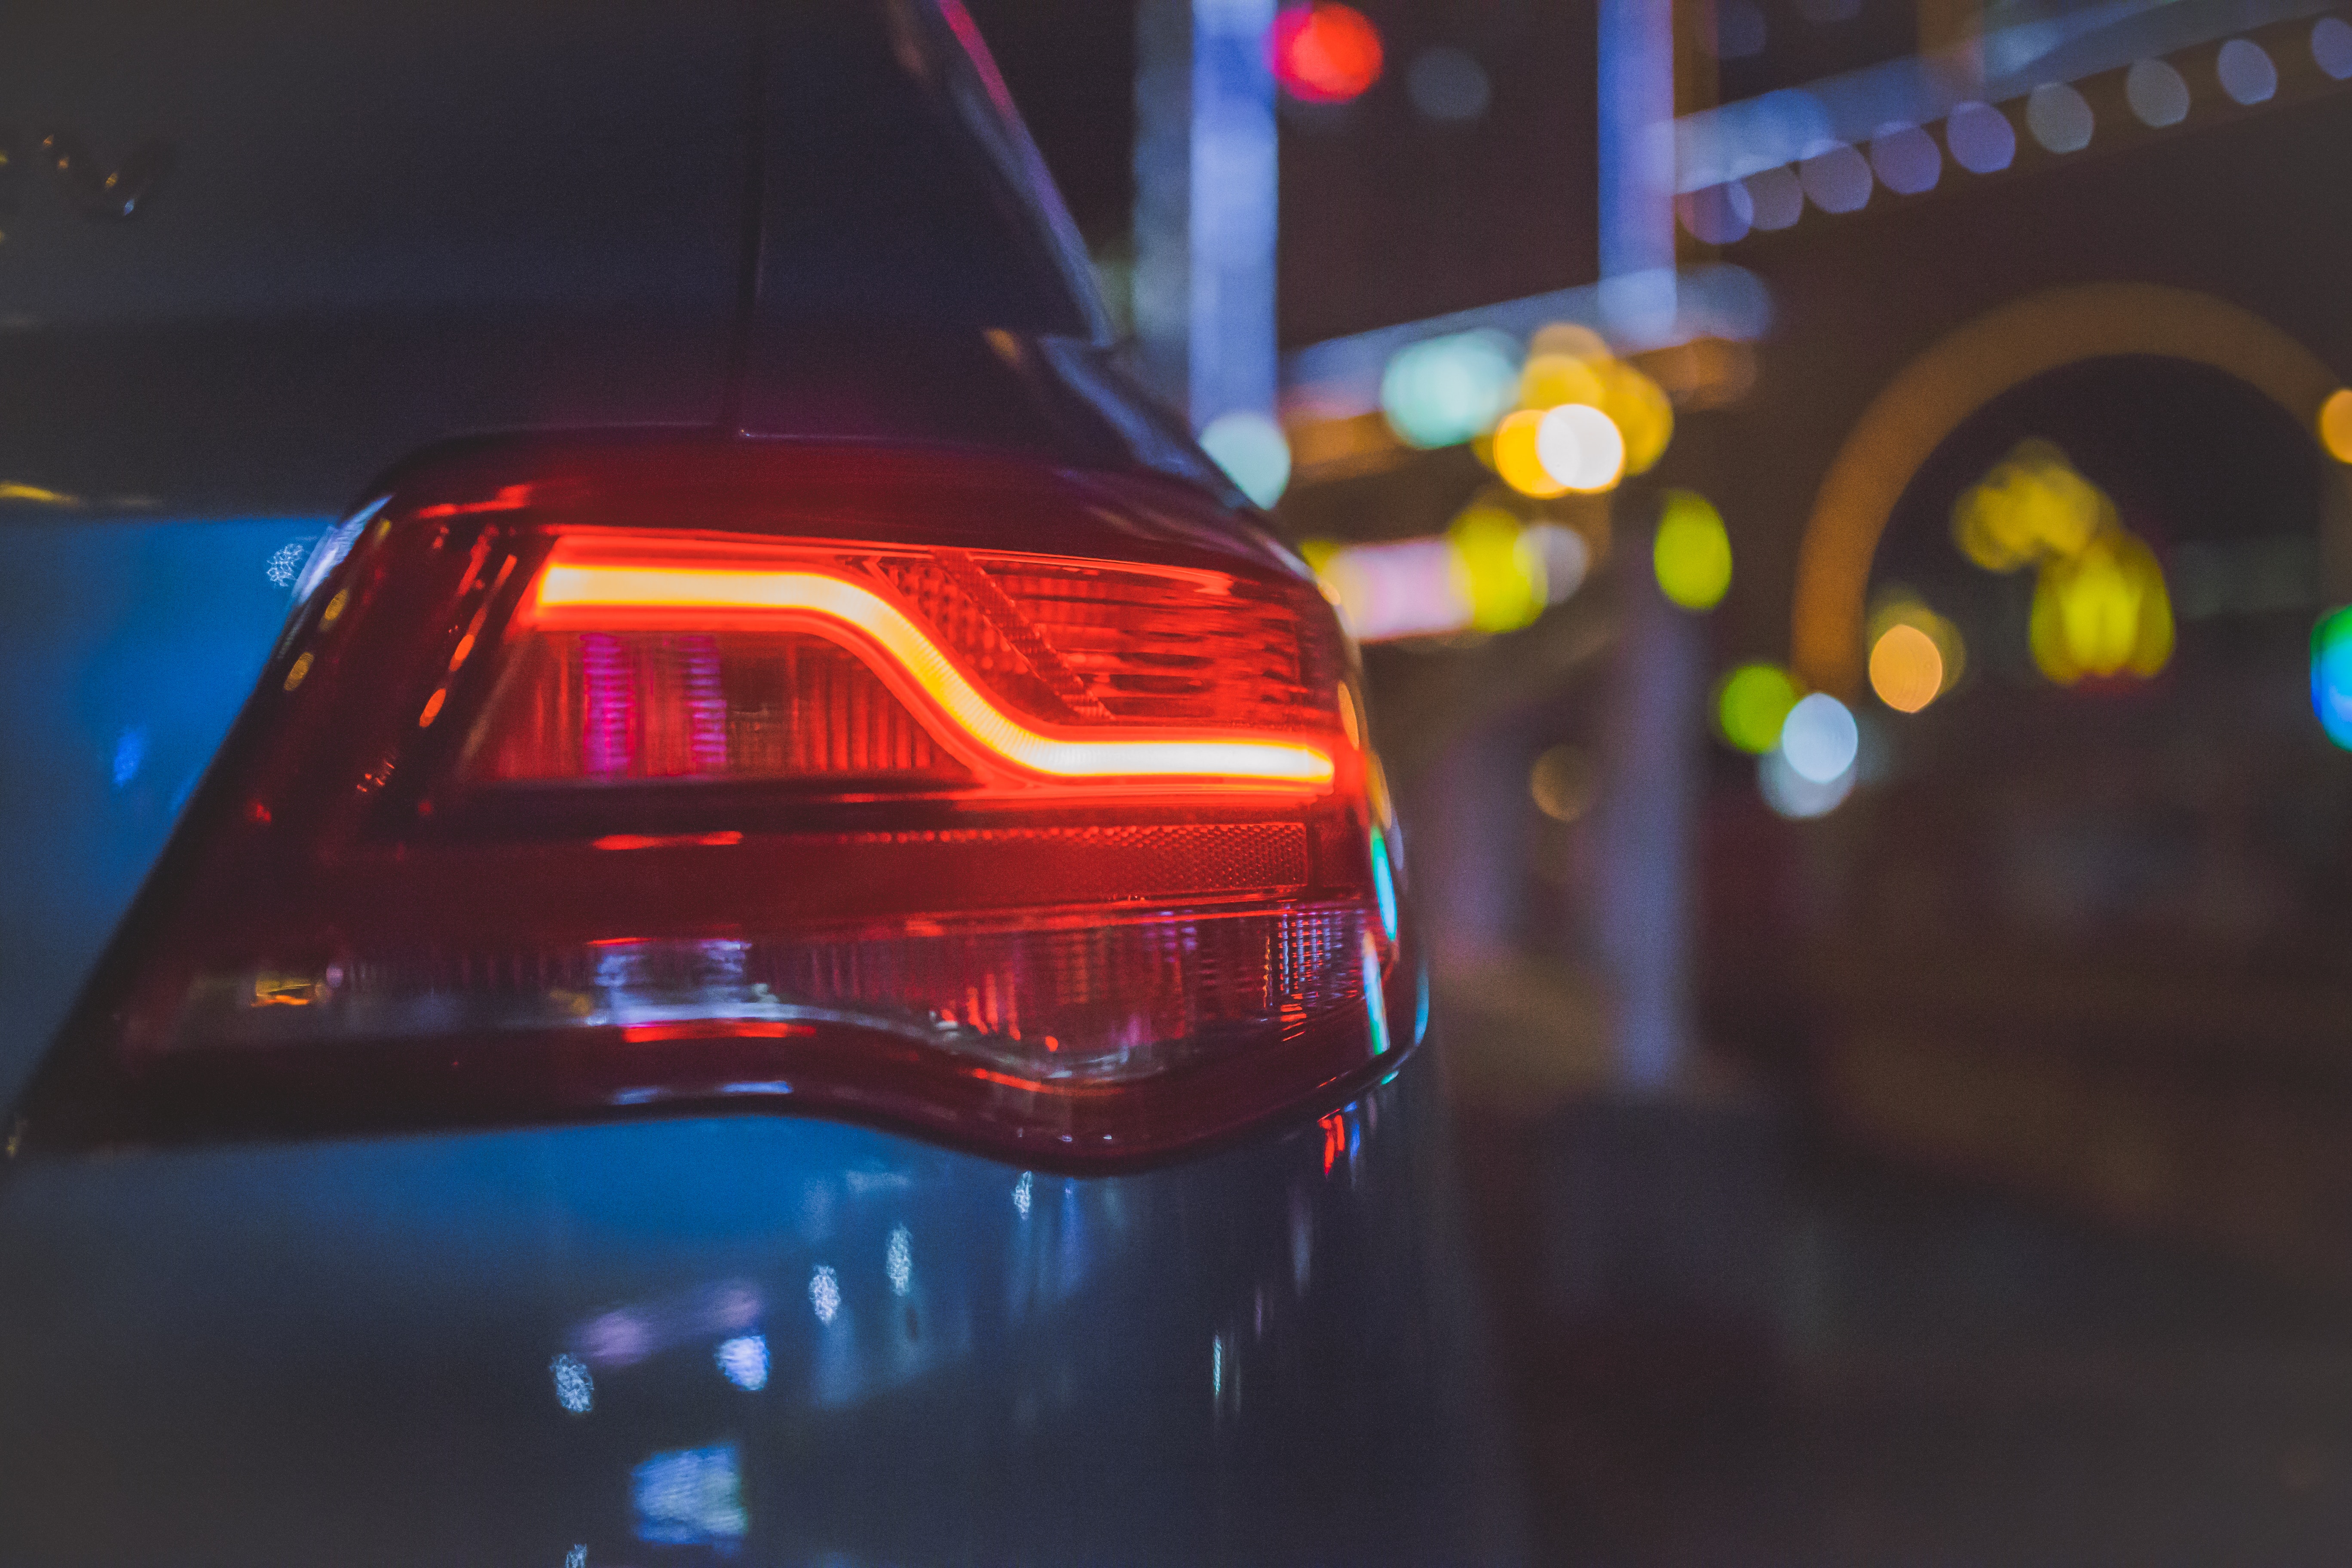 Free stock photos of car lights · Pexels